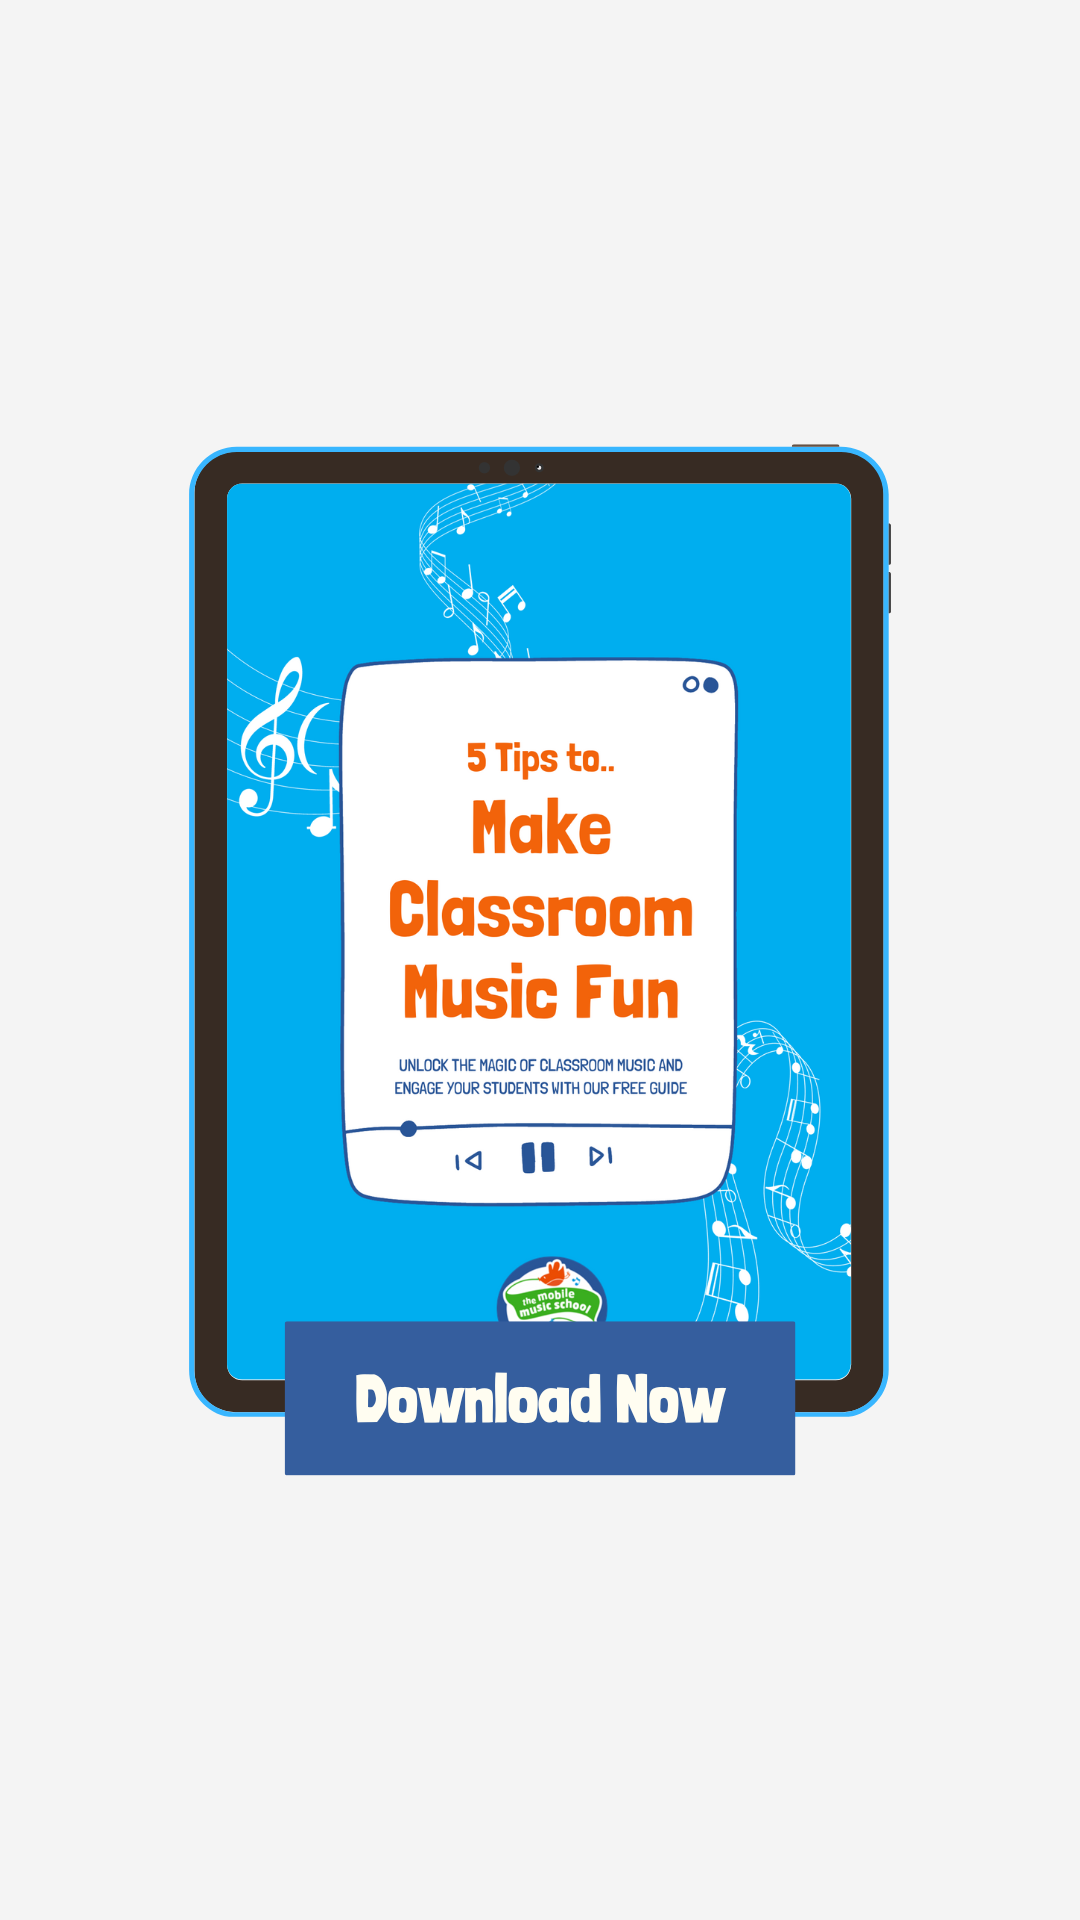 Free Guide - 5 Tips to Make Classroom Music Fun